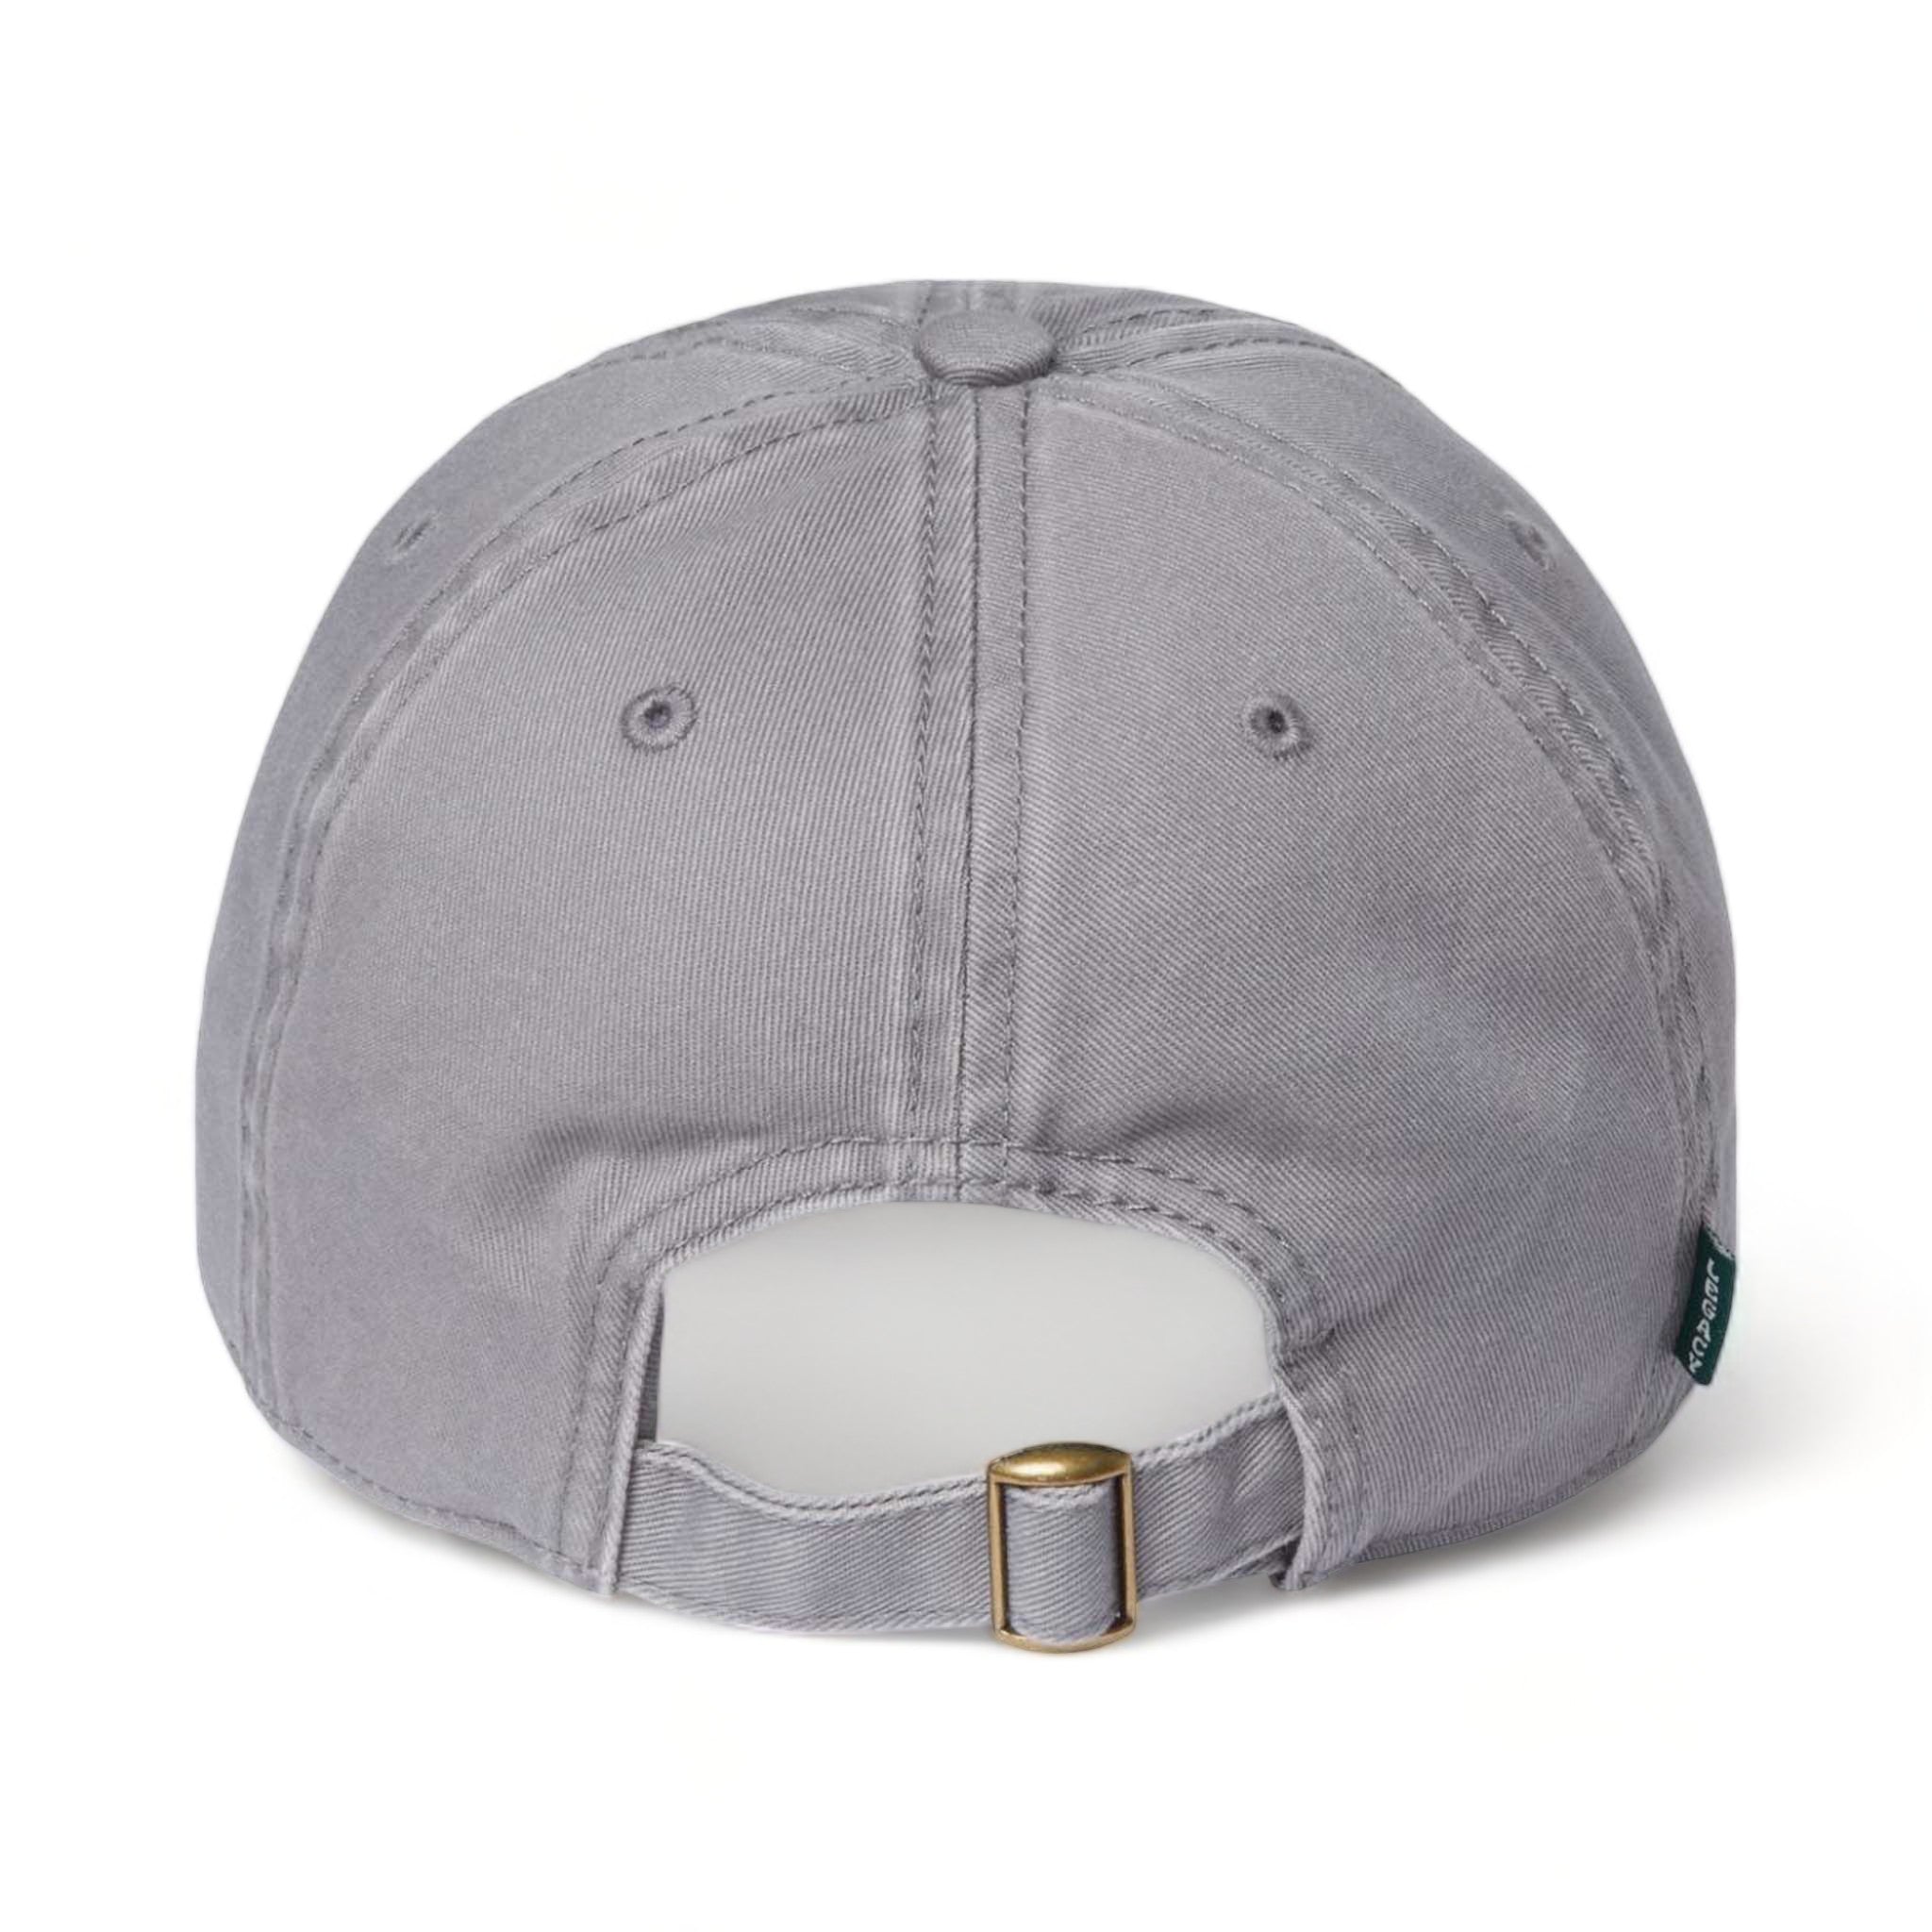 Back view of LEGACY EZA custom hat in grey